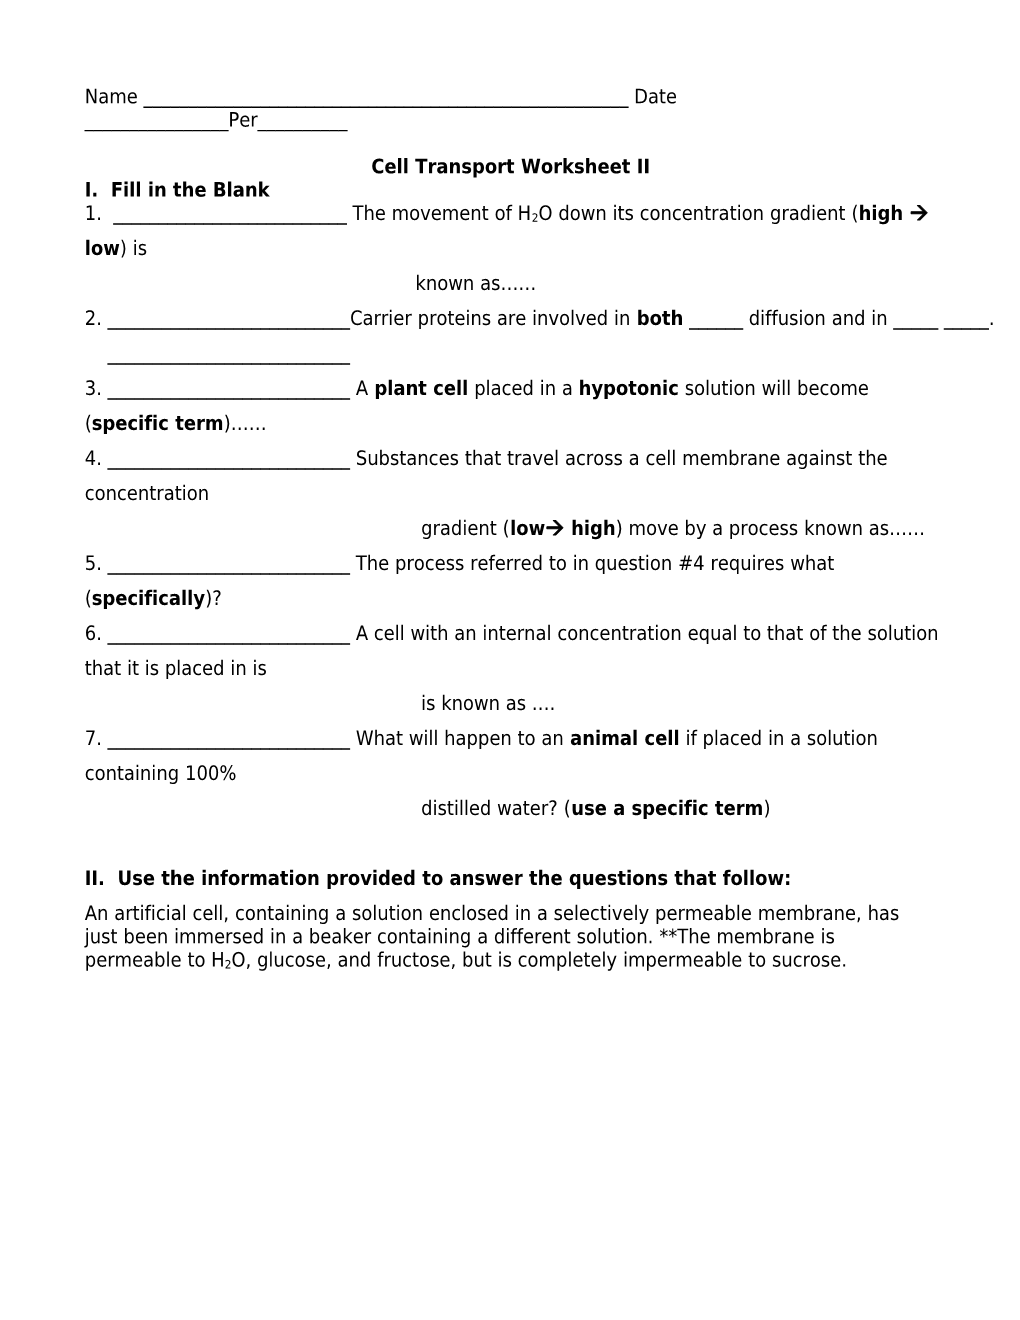 Cell Transport Worksheet II